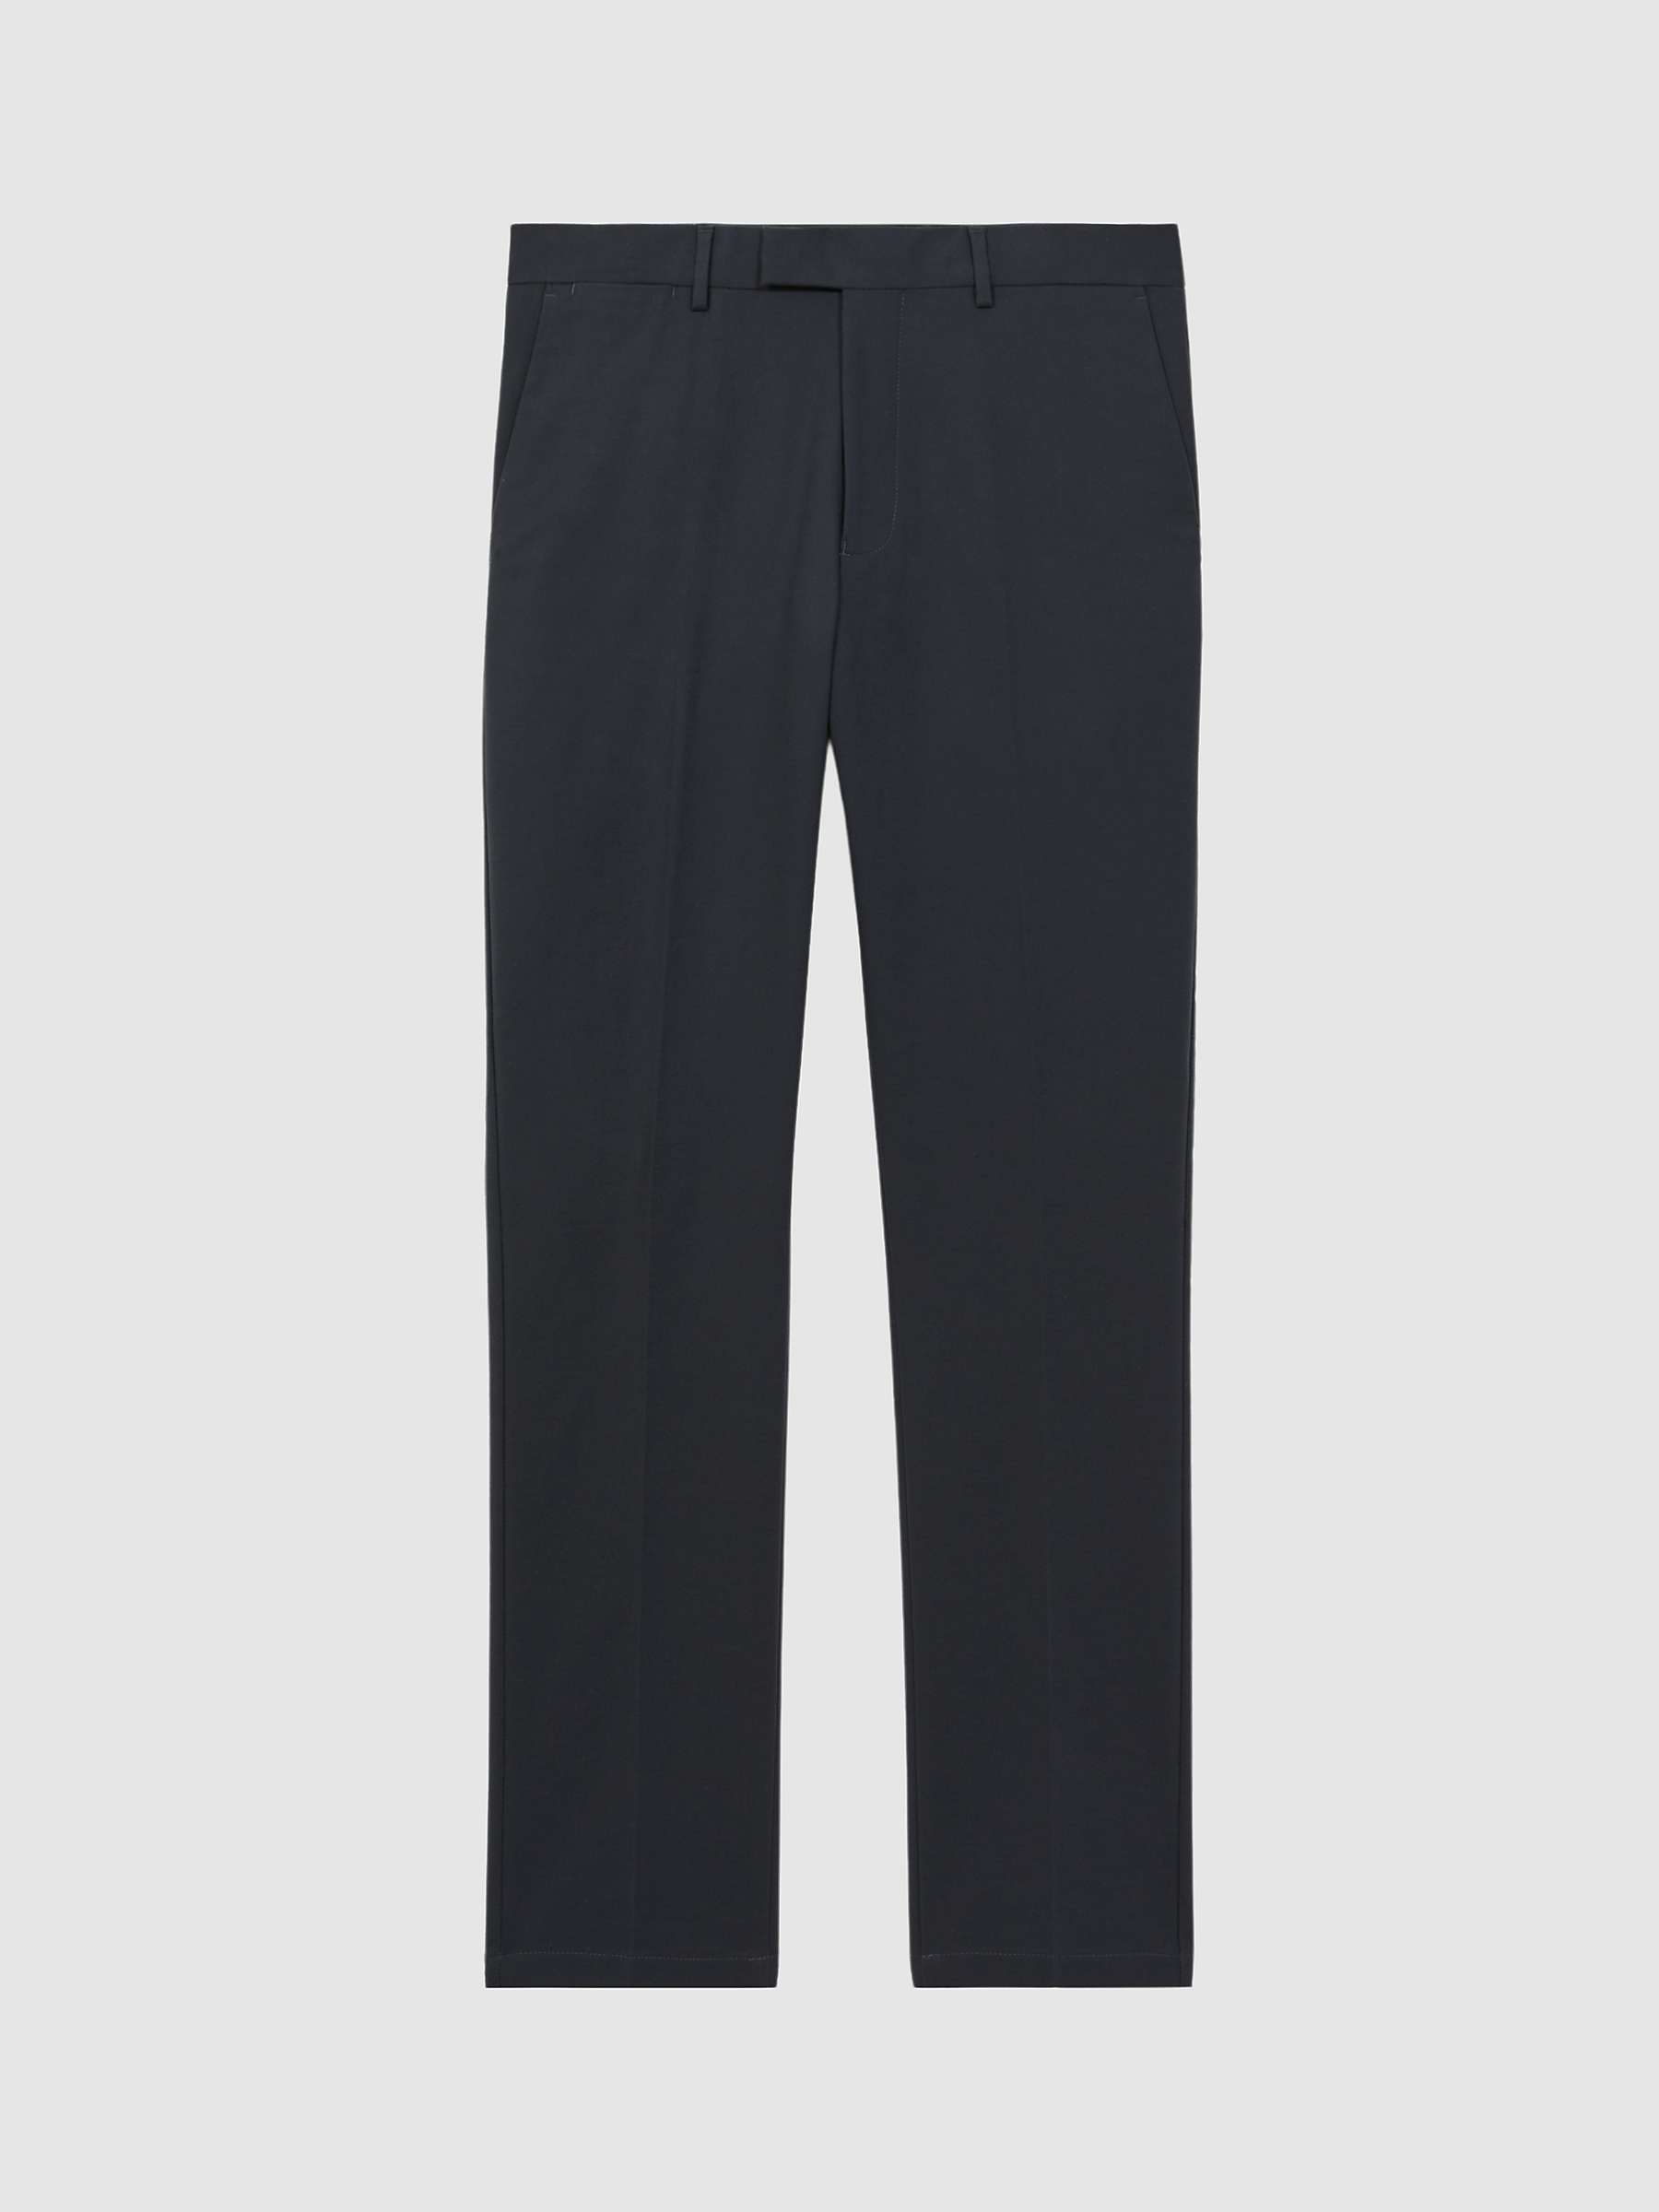 Buy Reiss Eastbury Straight Fit Chino Trousers, Dark Grey Online at johnlewis.com